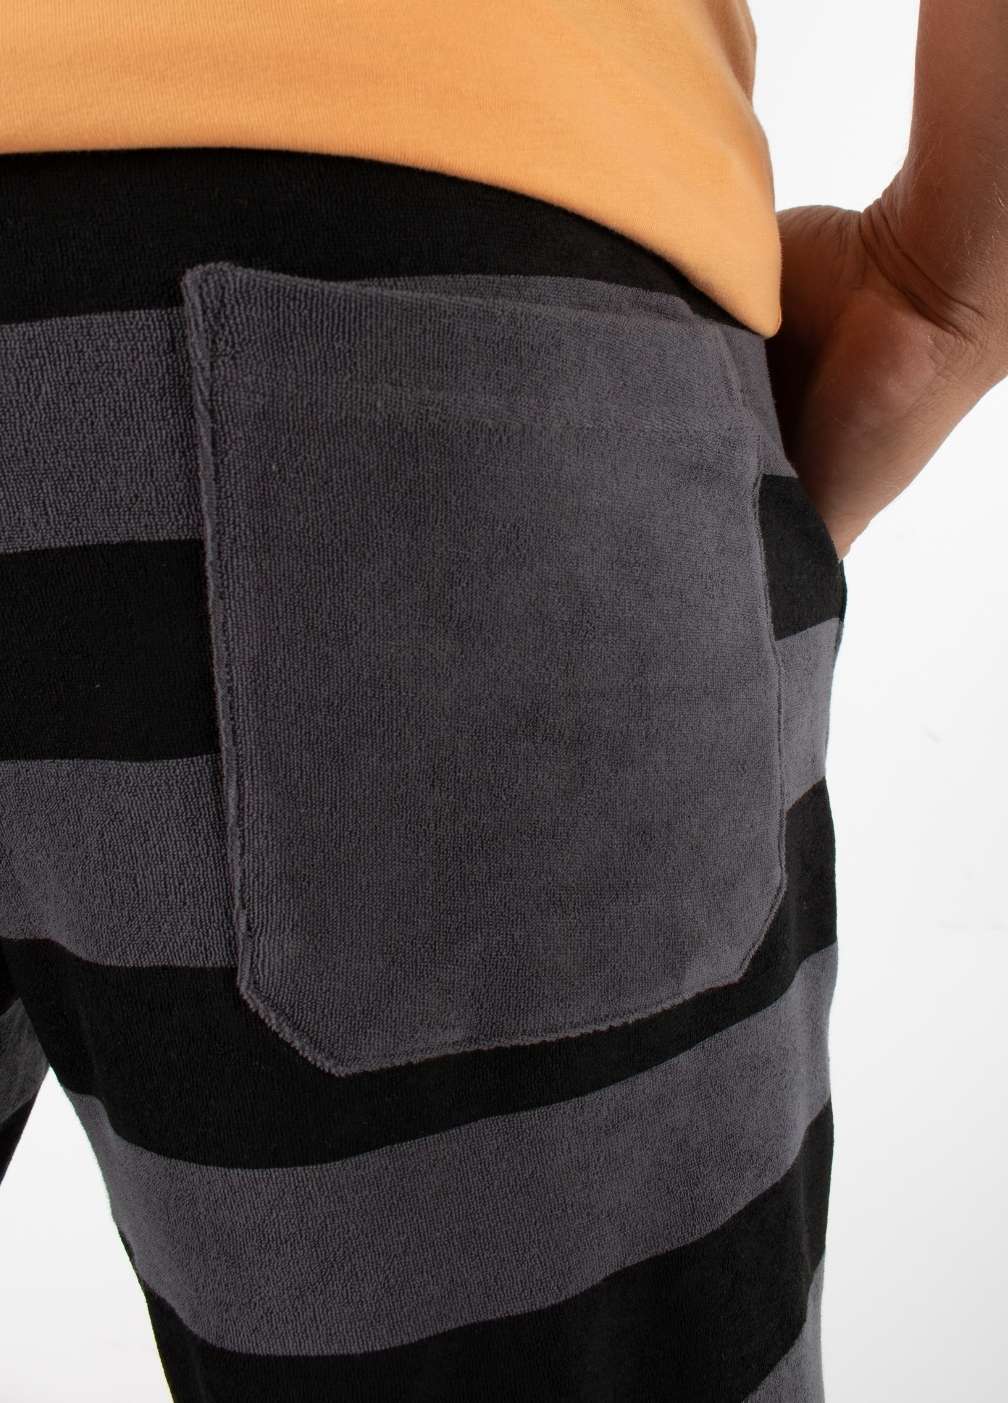 EBONY TOWEL SHORTS ST closeup - back pocket - men's shorts with single back pocket